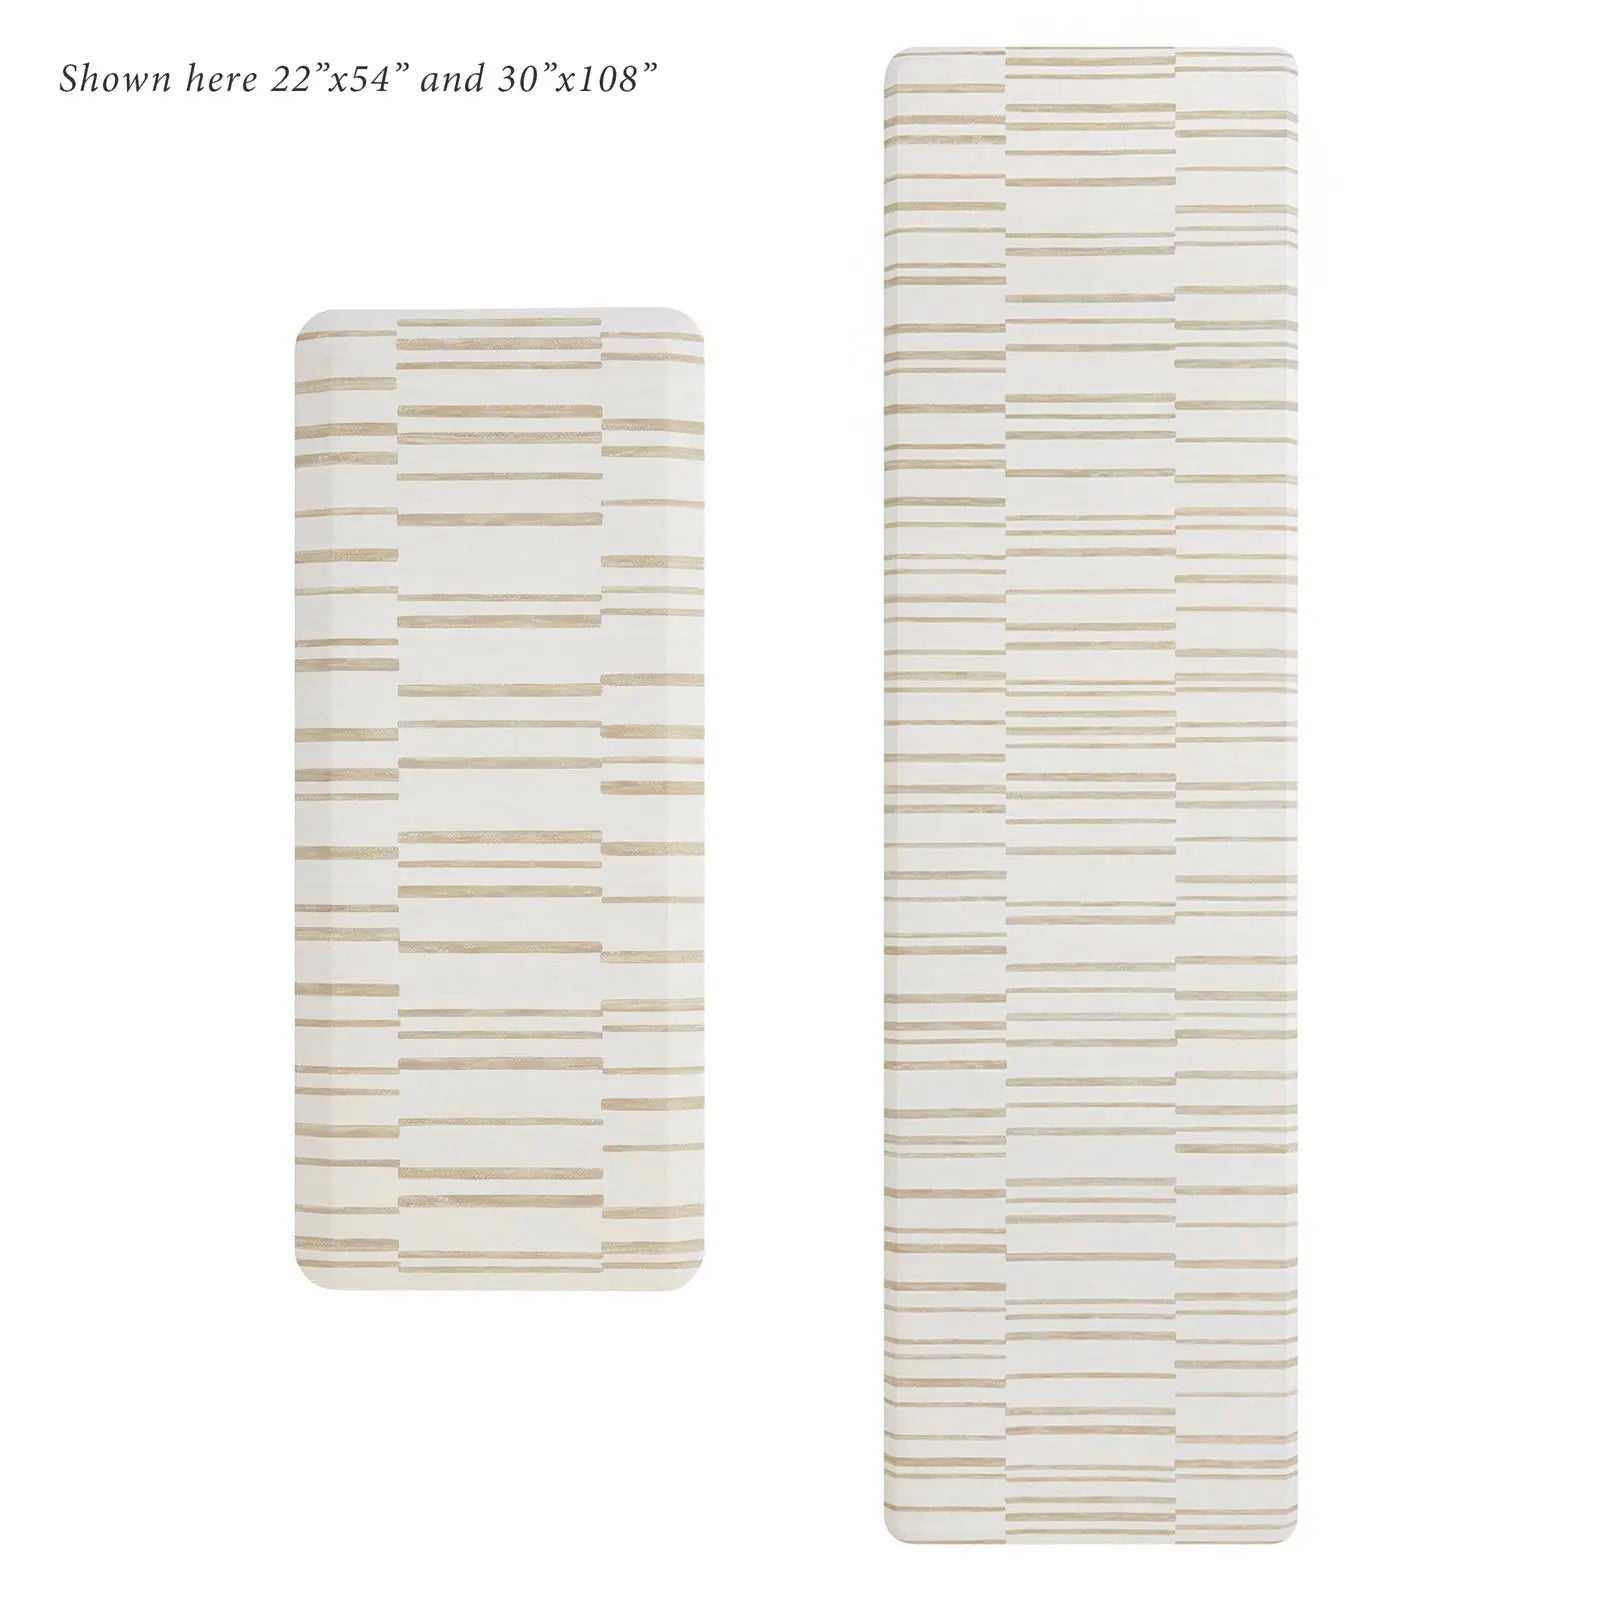 Beige inverted stripe kitchen mat shown in size 22x54 and 30x108